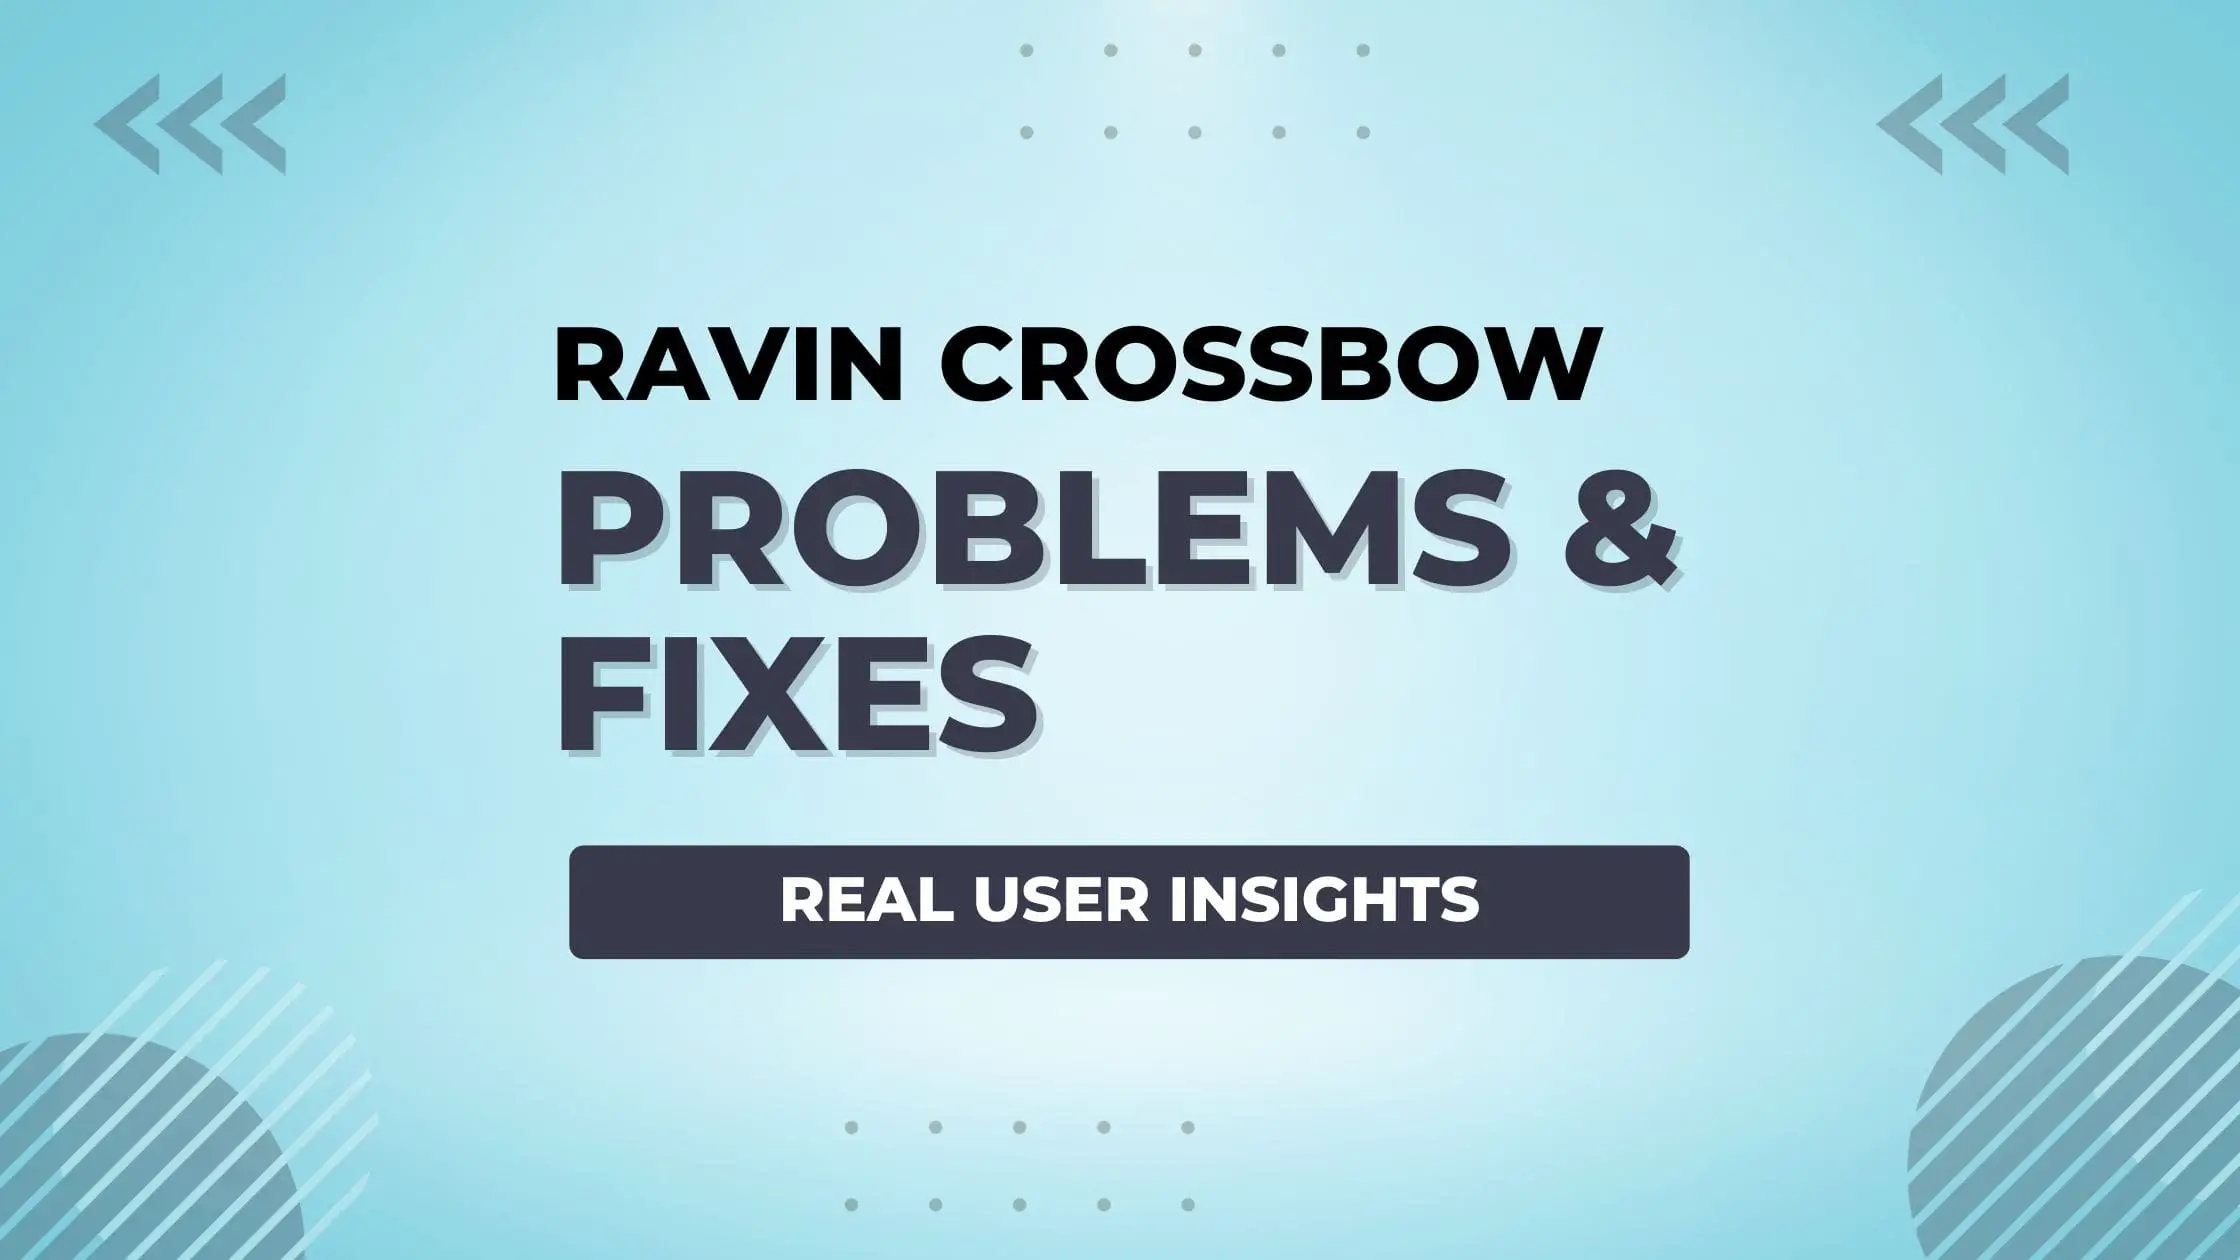 Ravin Crossbow problem